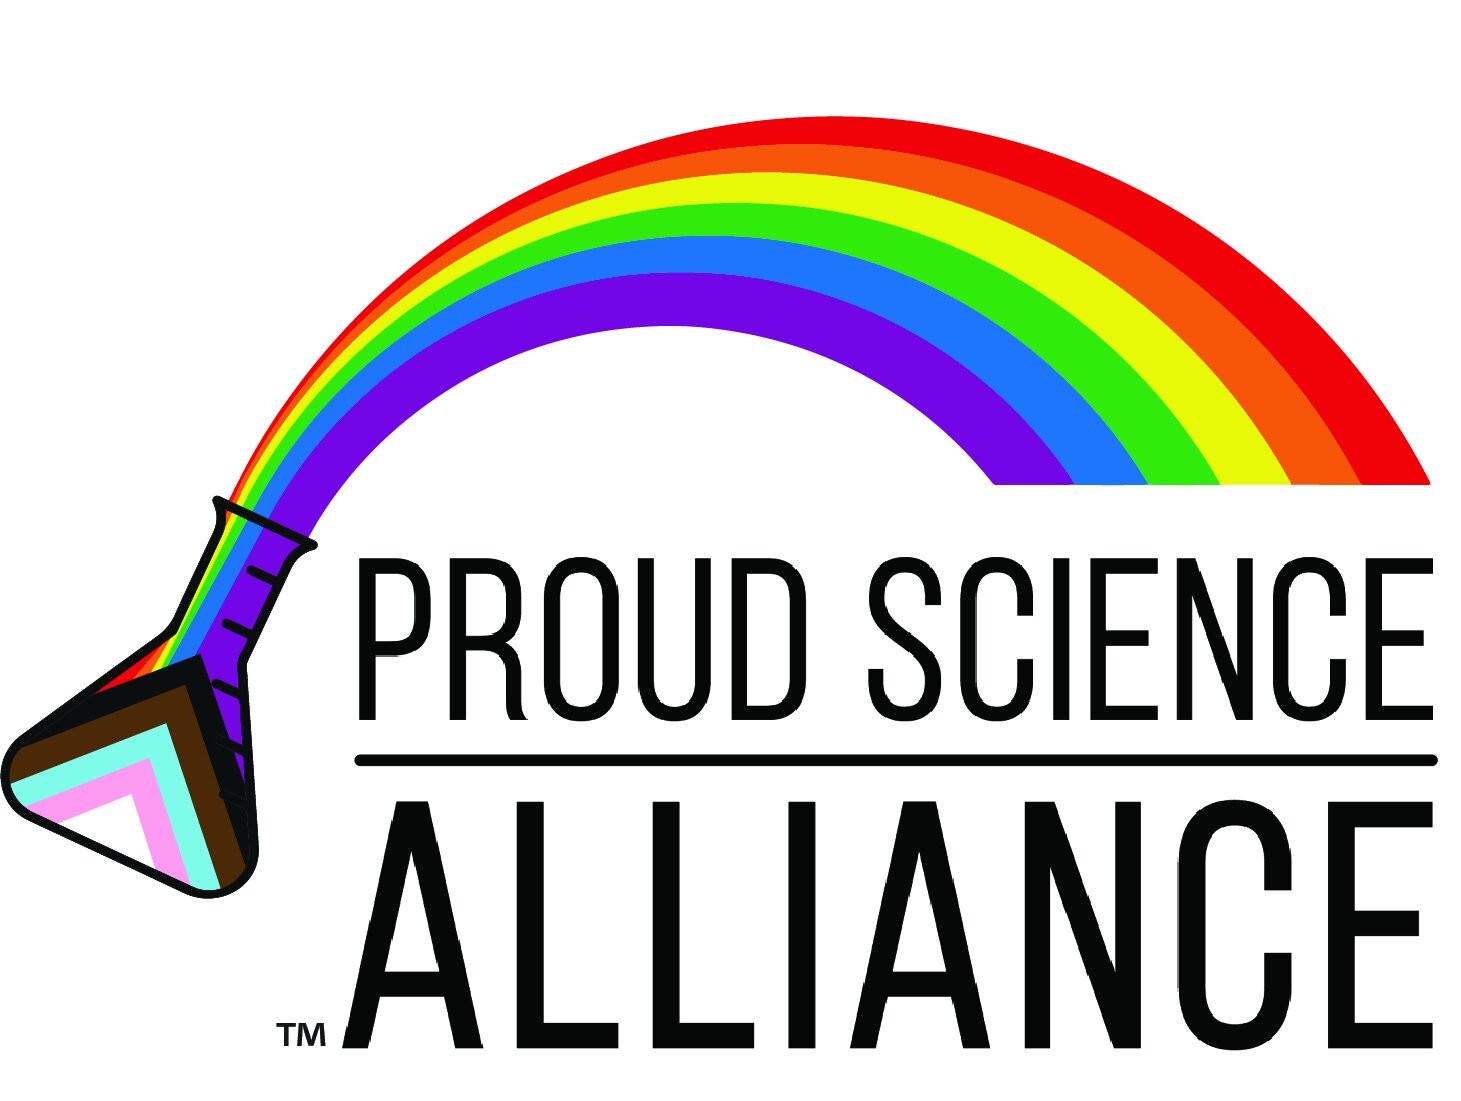 Proud Science Alliance